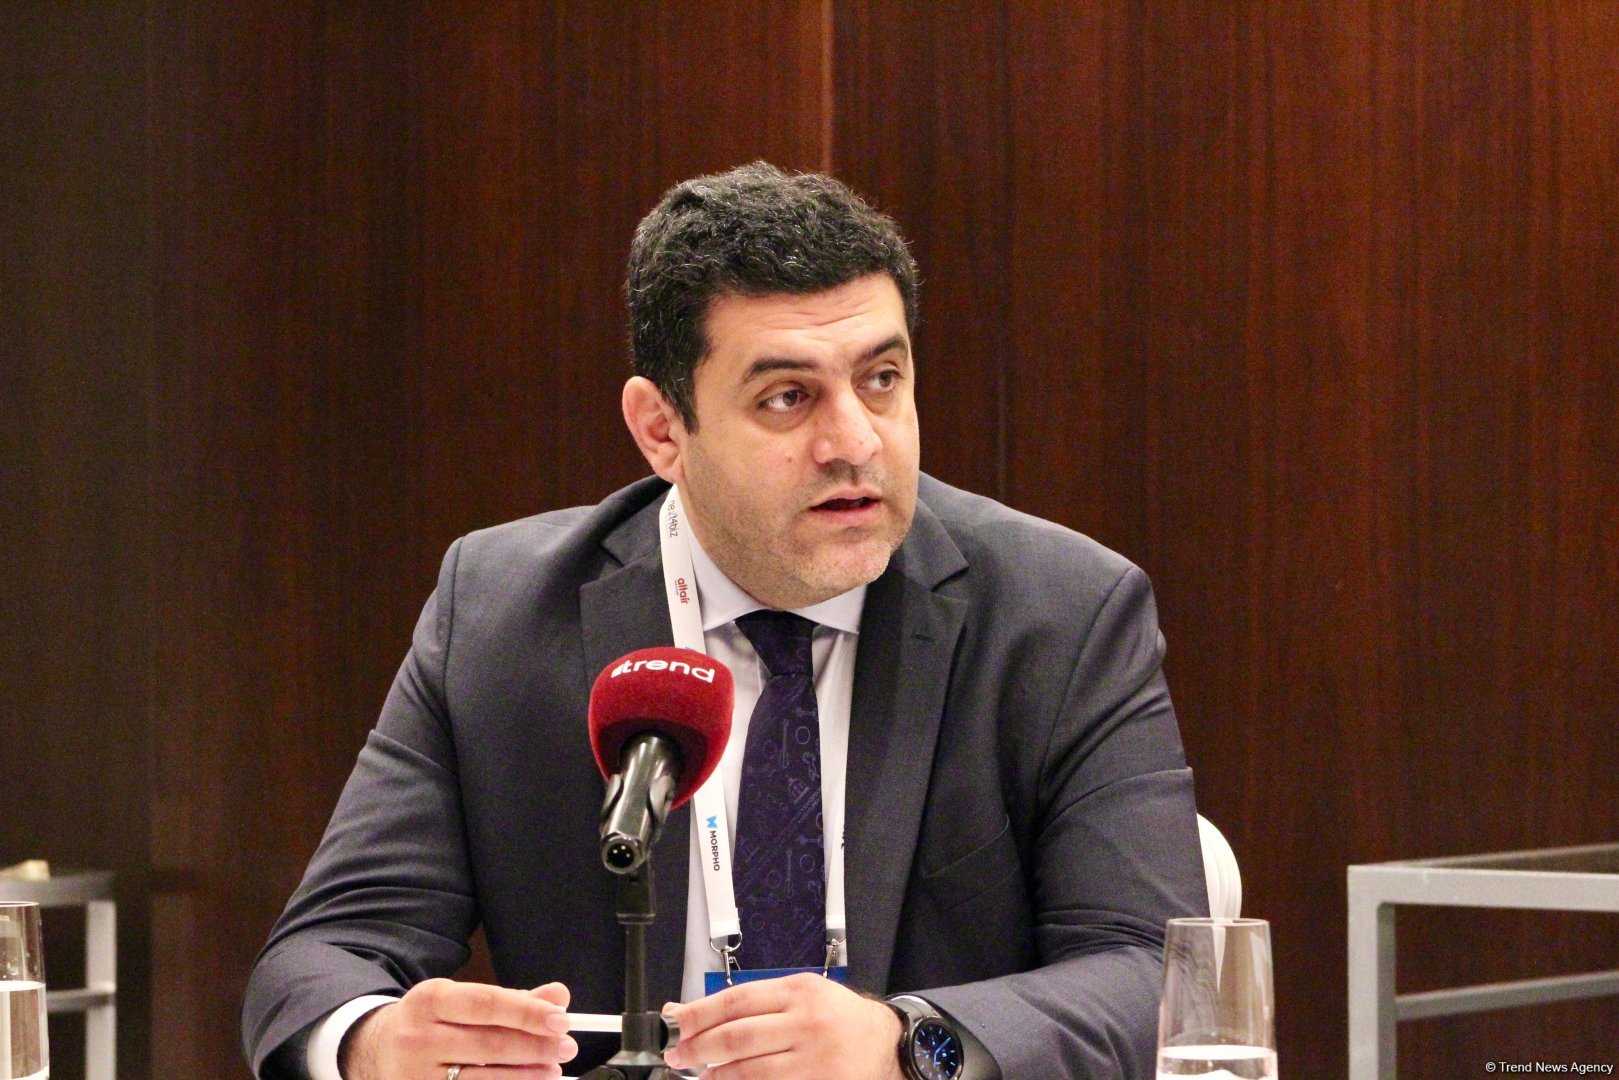 Visa to keep supporting women entrepreneurs in Azerbaijan - senior director (Exclusive)